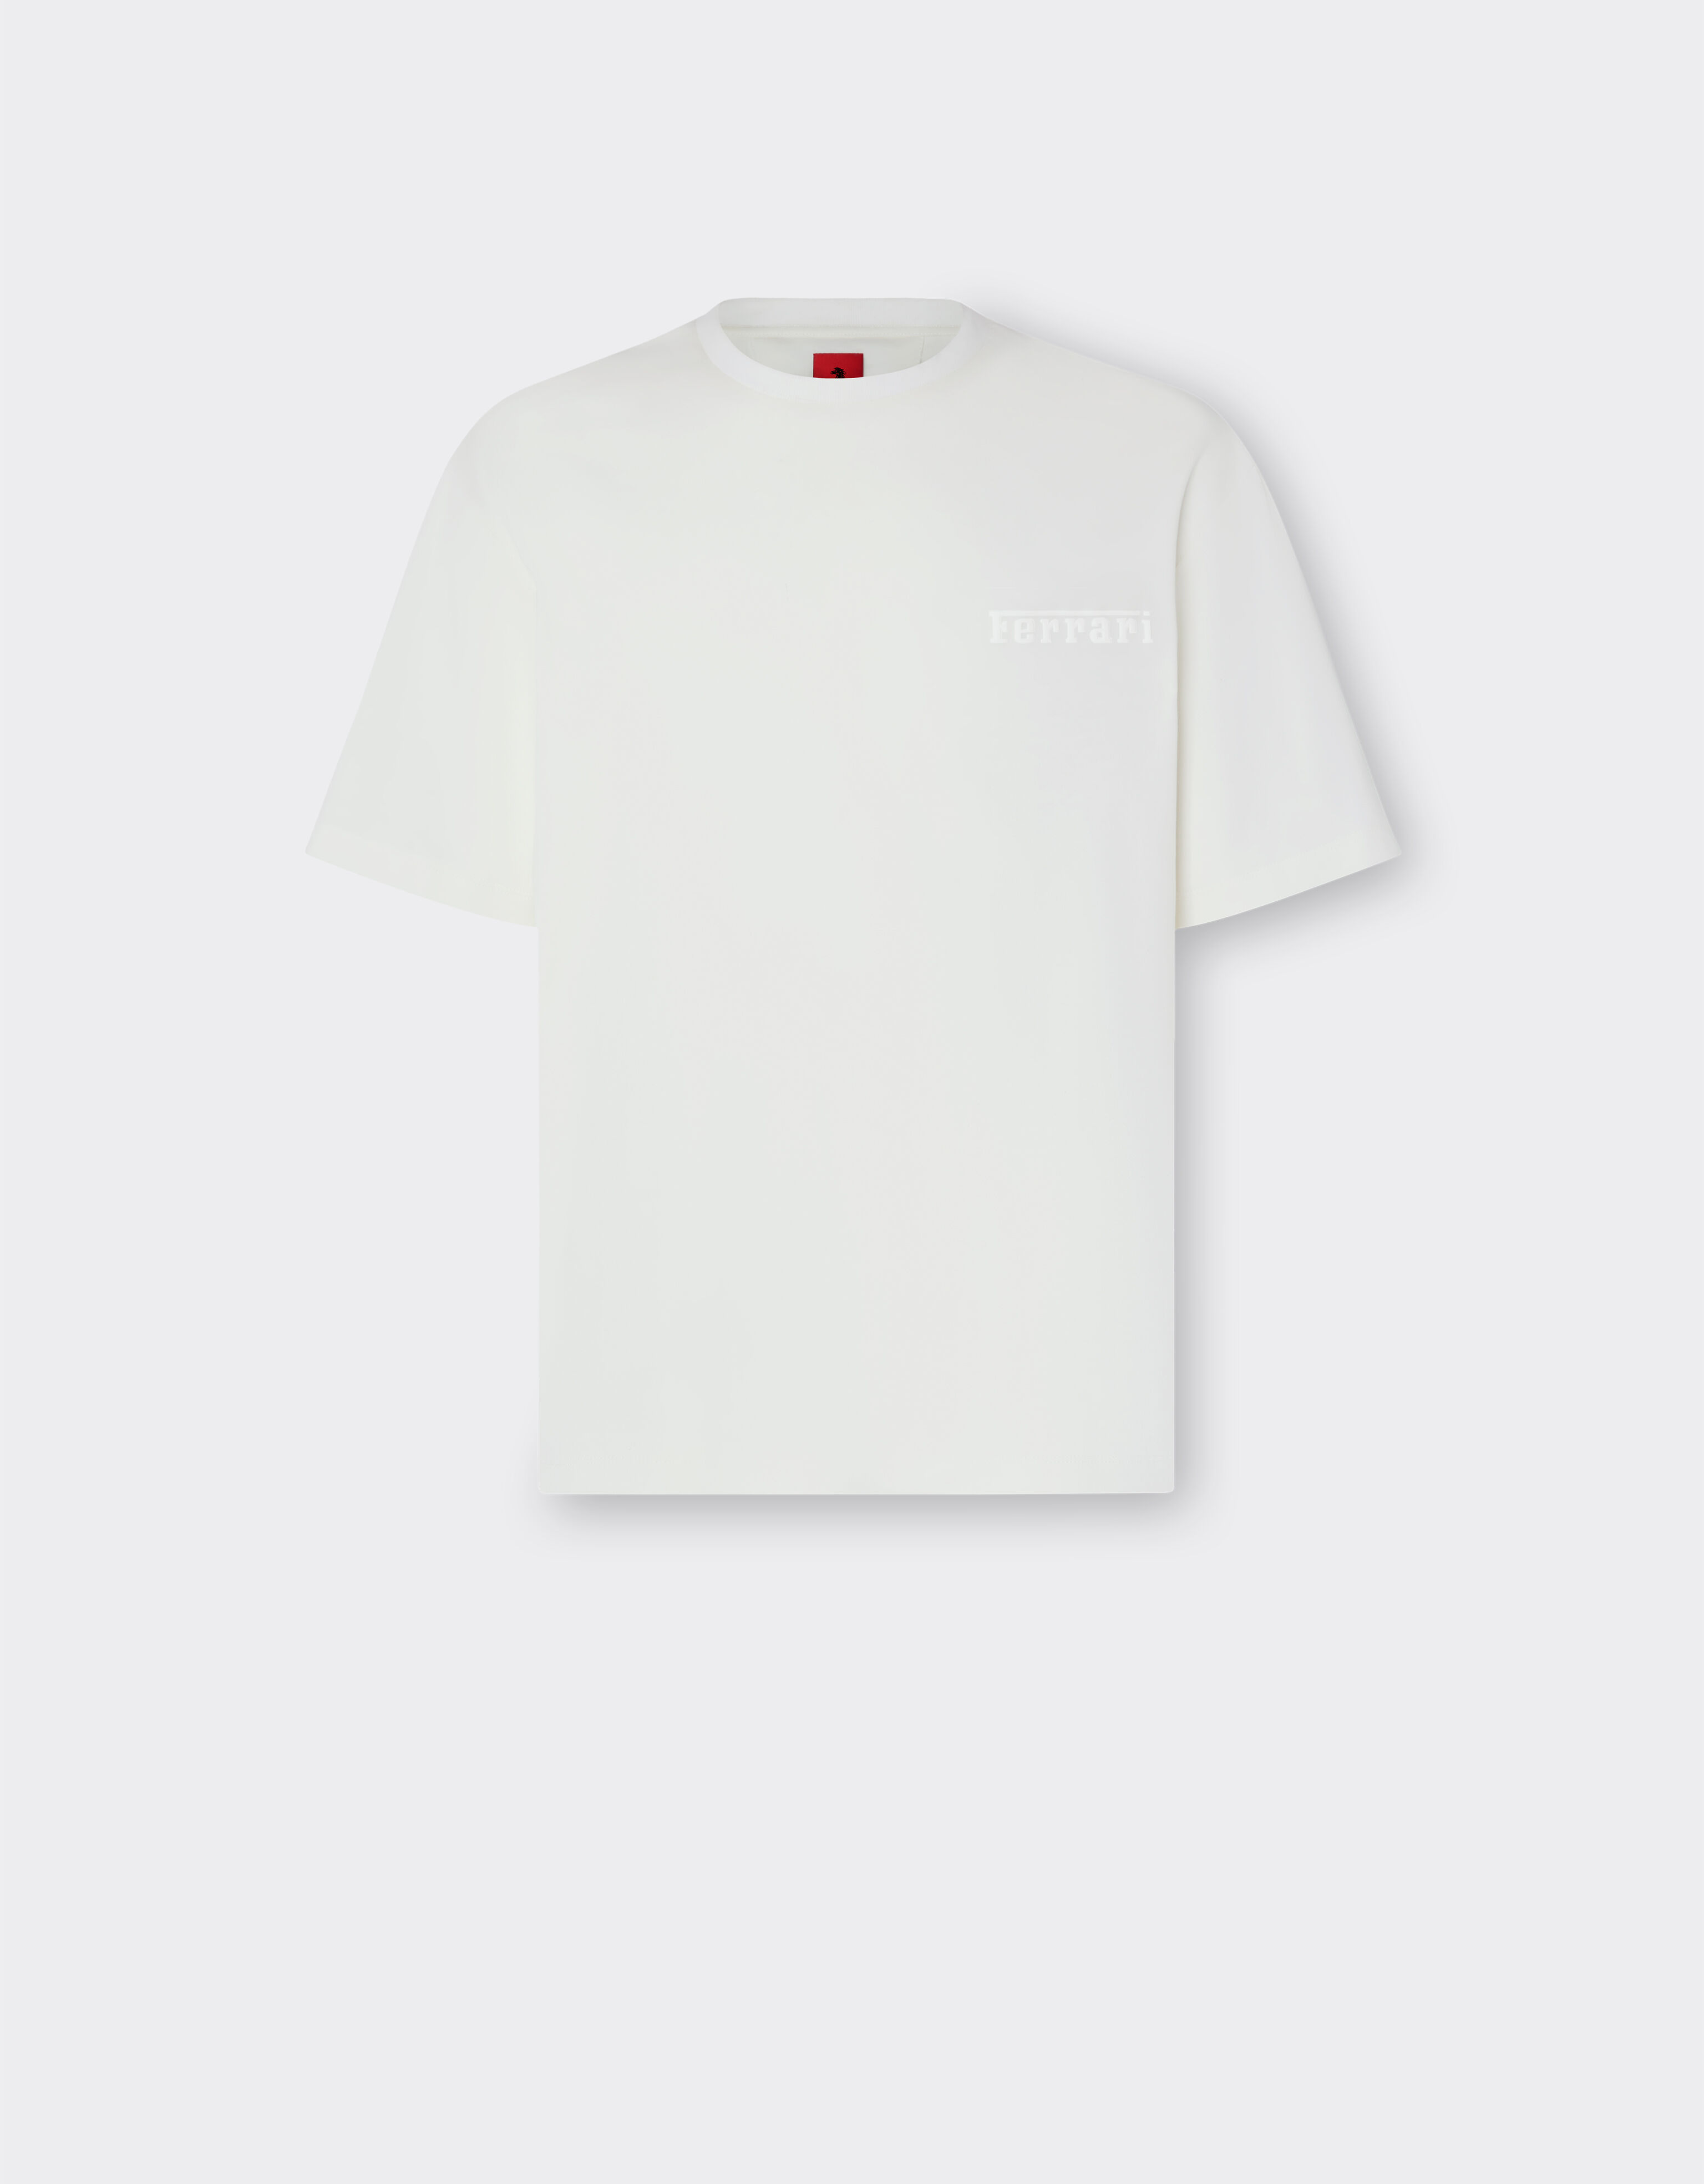 Ferrari Cotton T-shirt with Ferrari logo Optical White 48114f